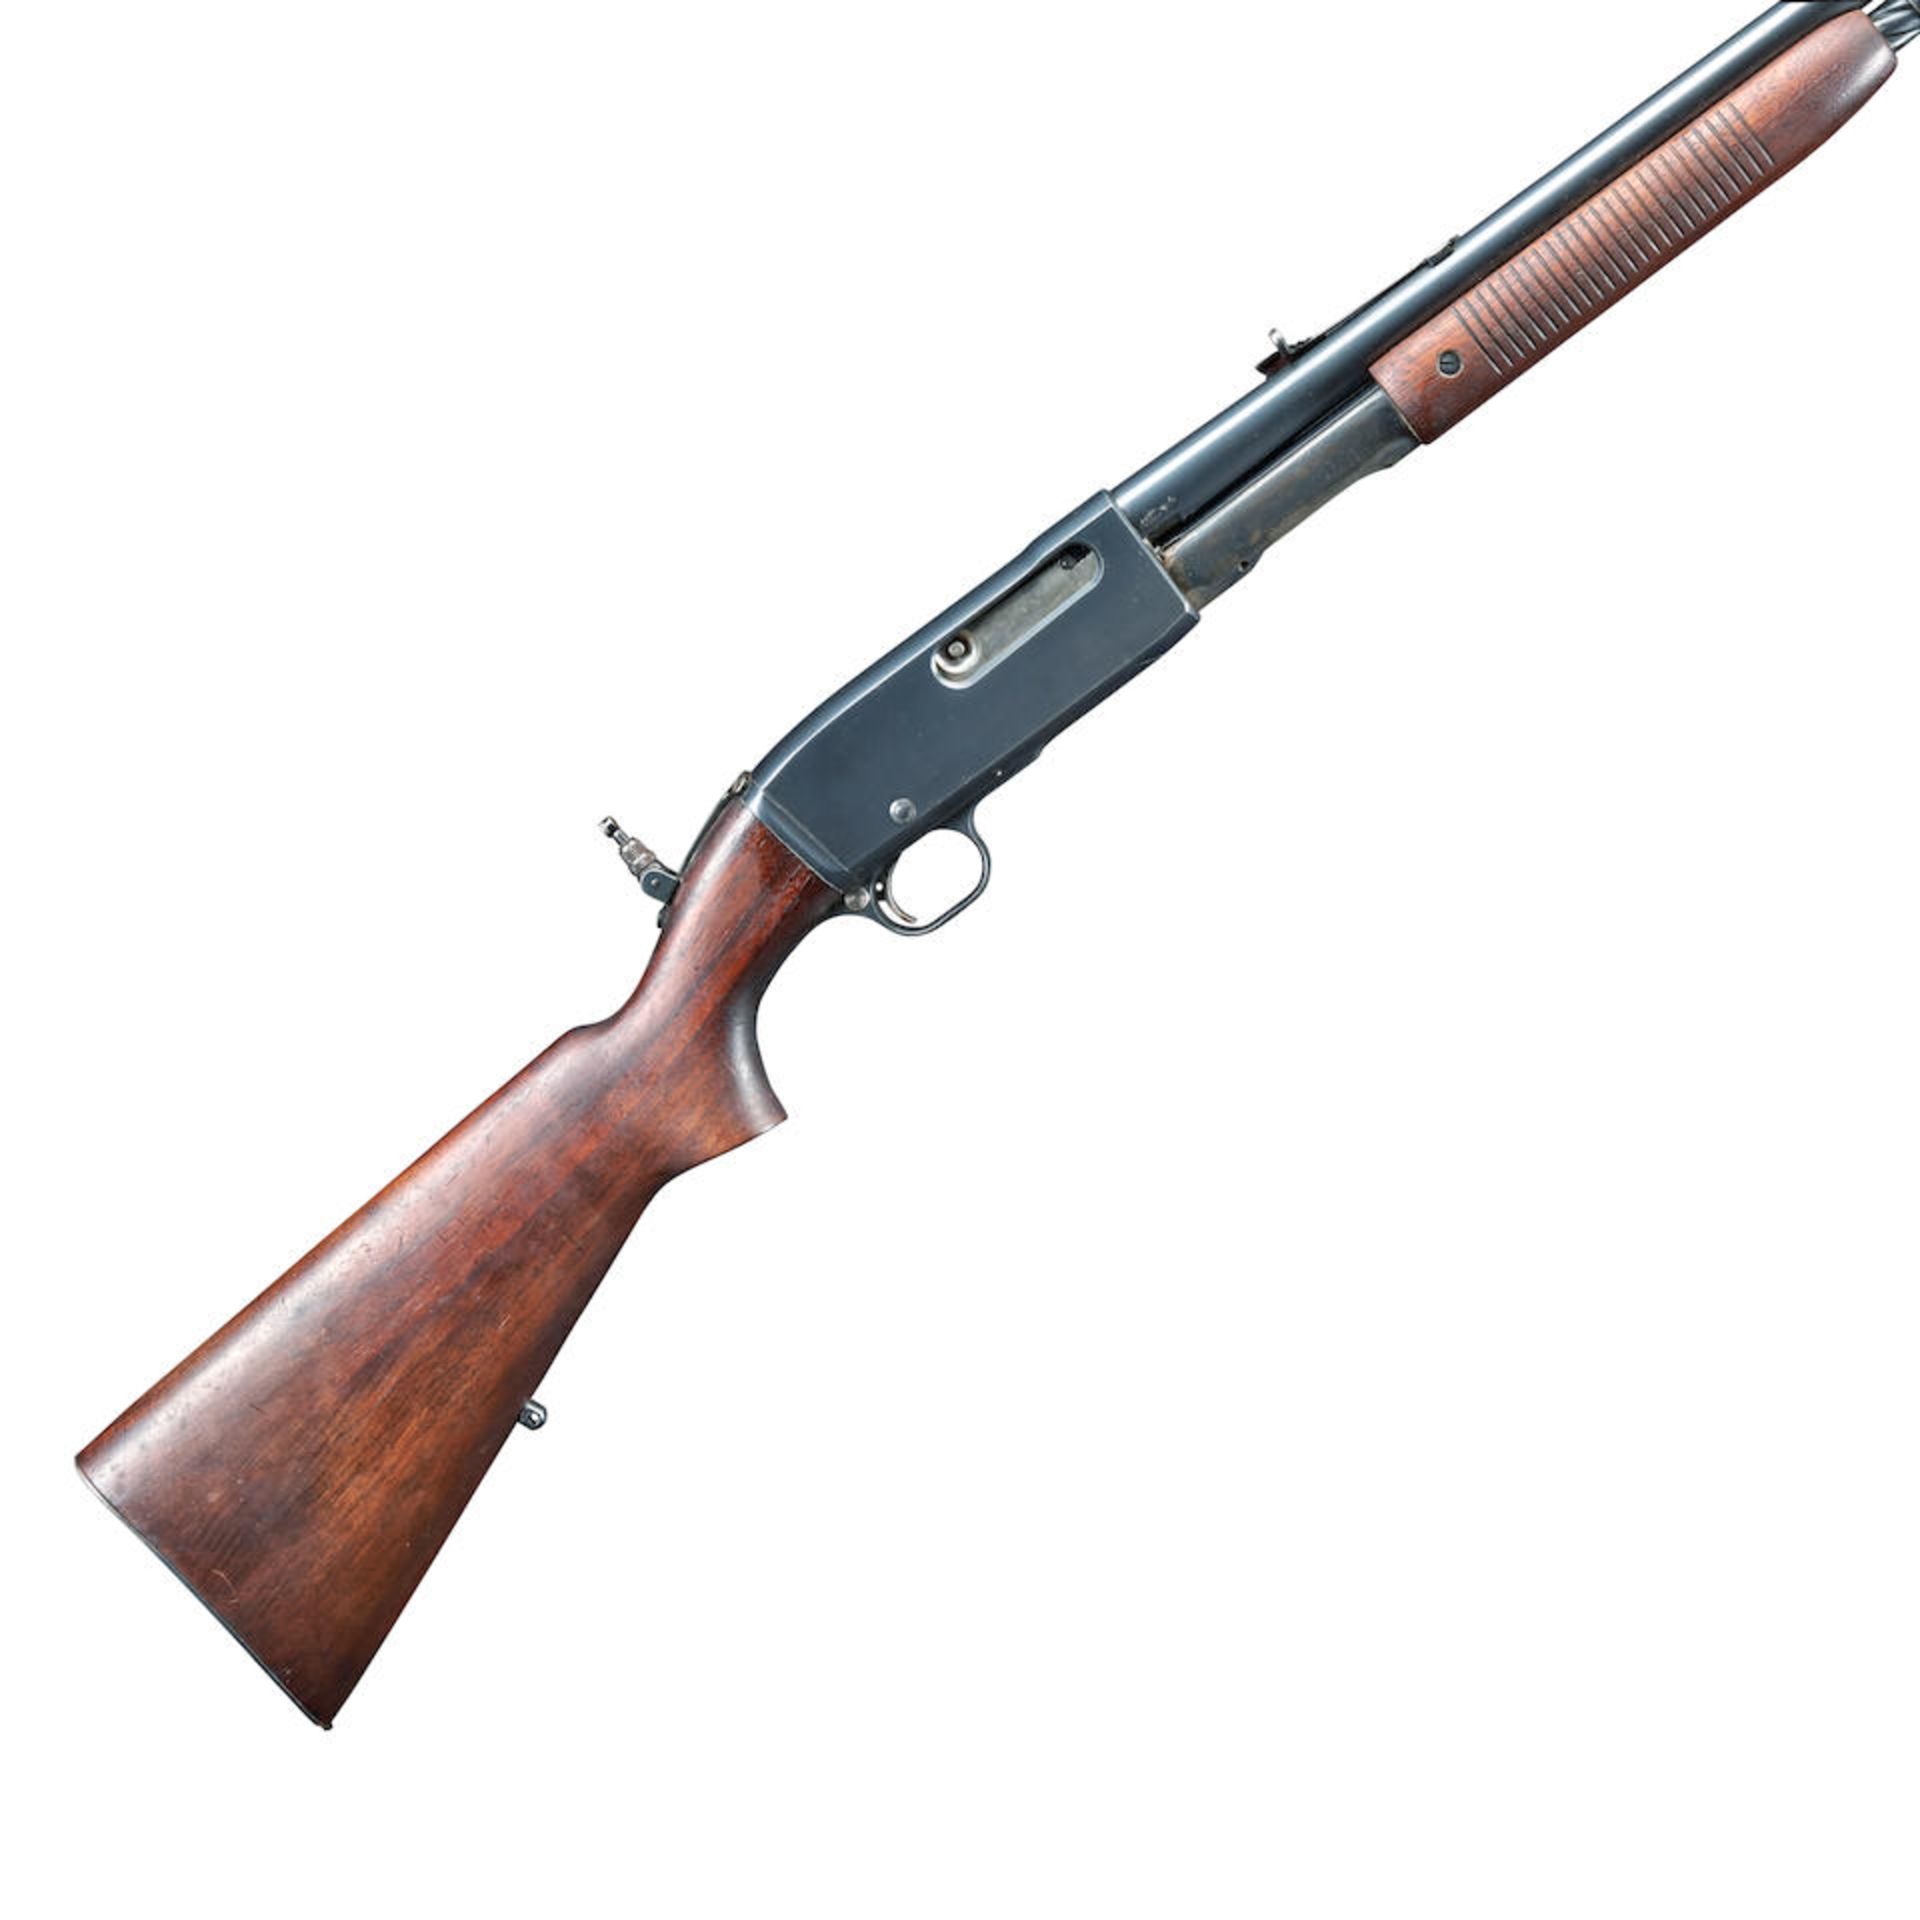 Remington Gamemaster Model 141 Pump Action Rifle, Curio or Relic firearm